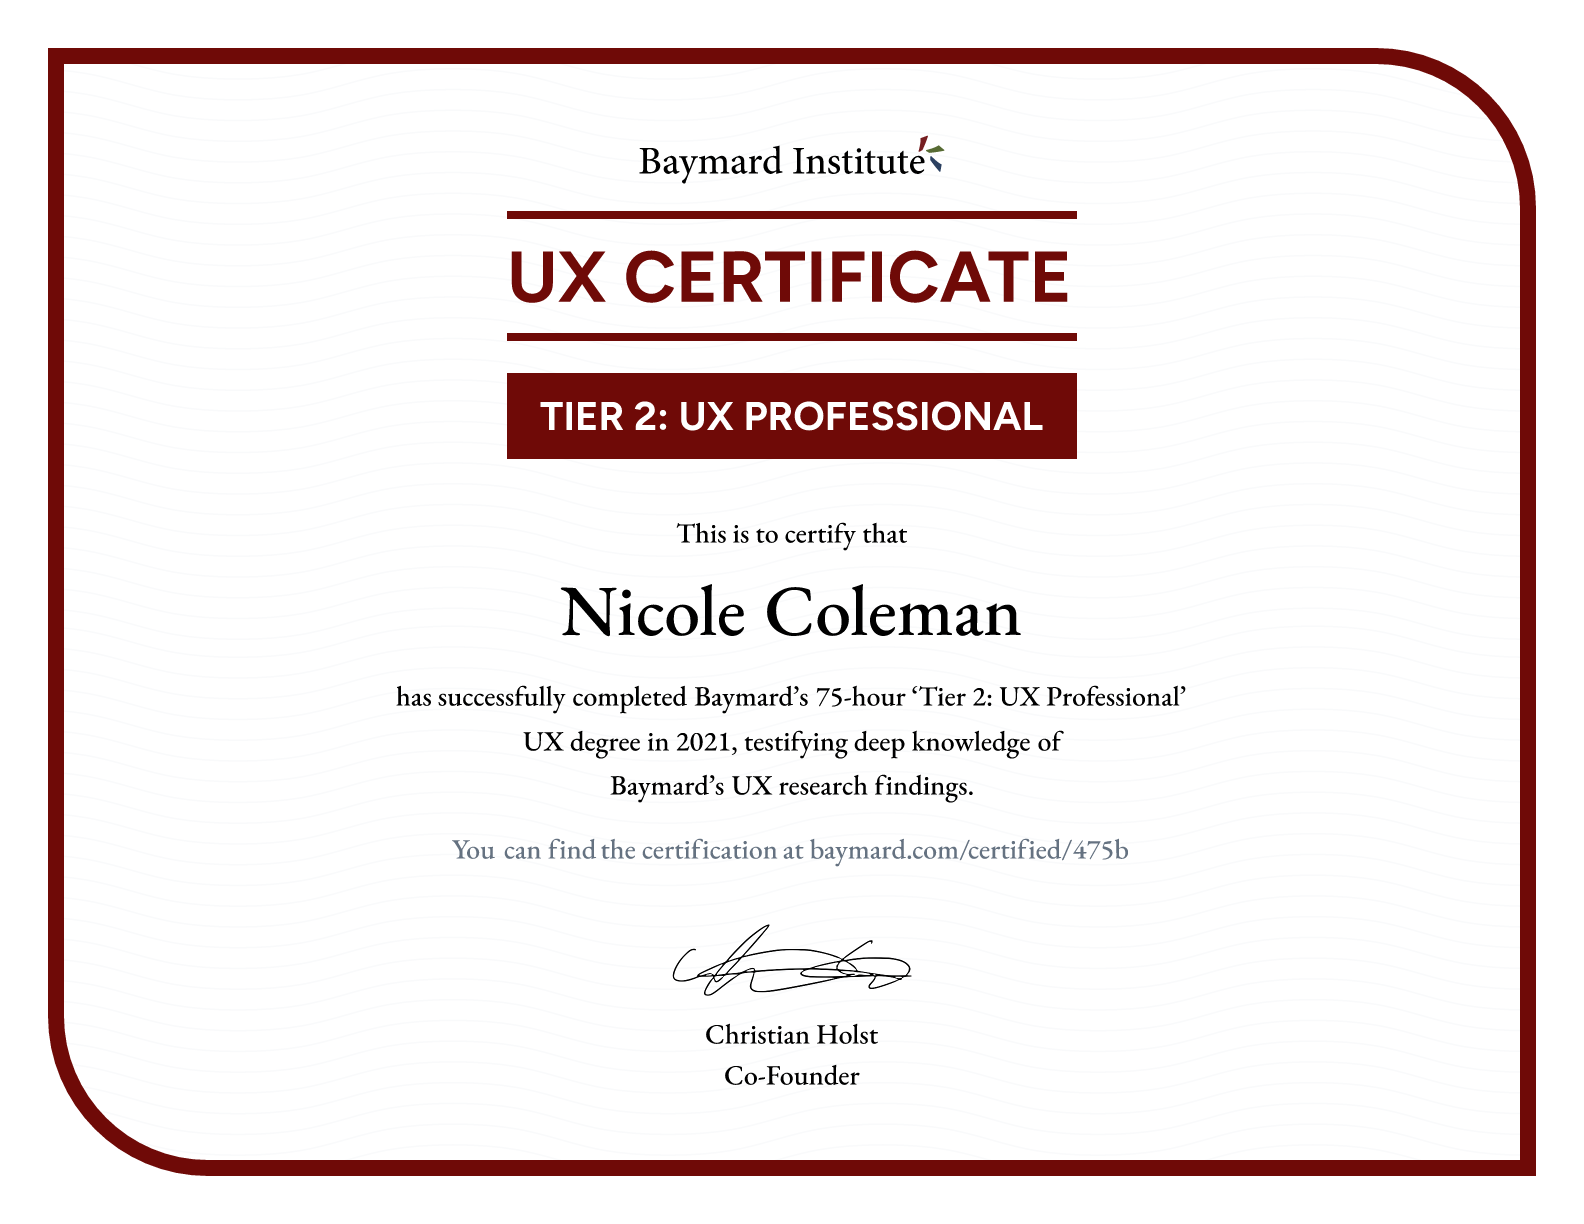 Nicole Coleman’s certificate